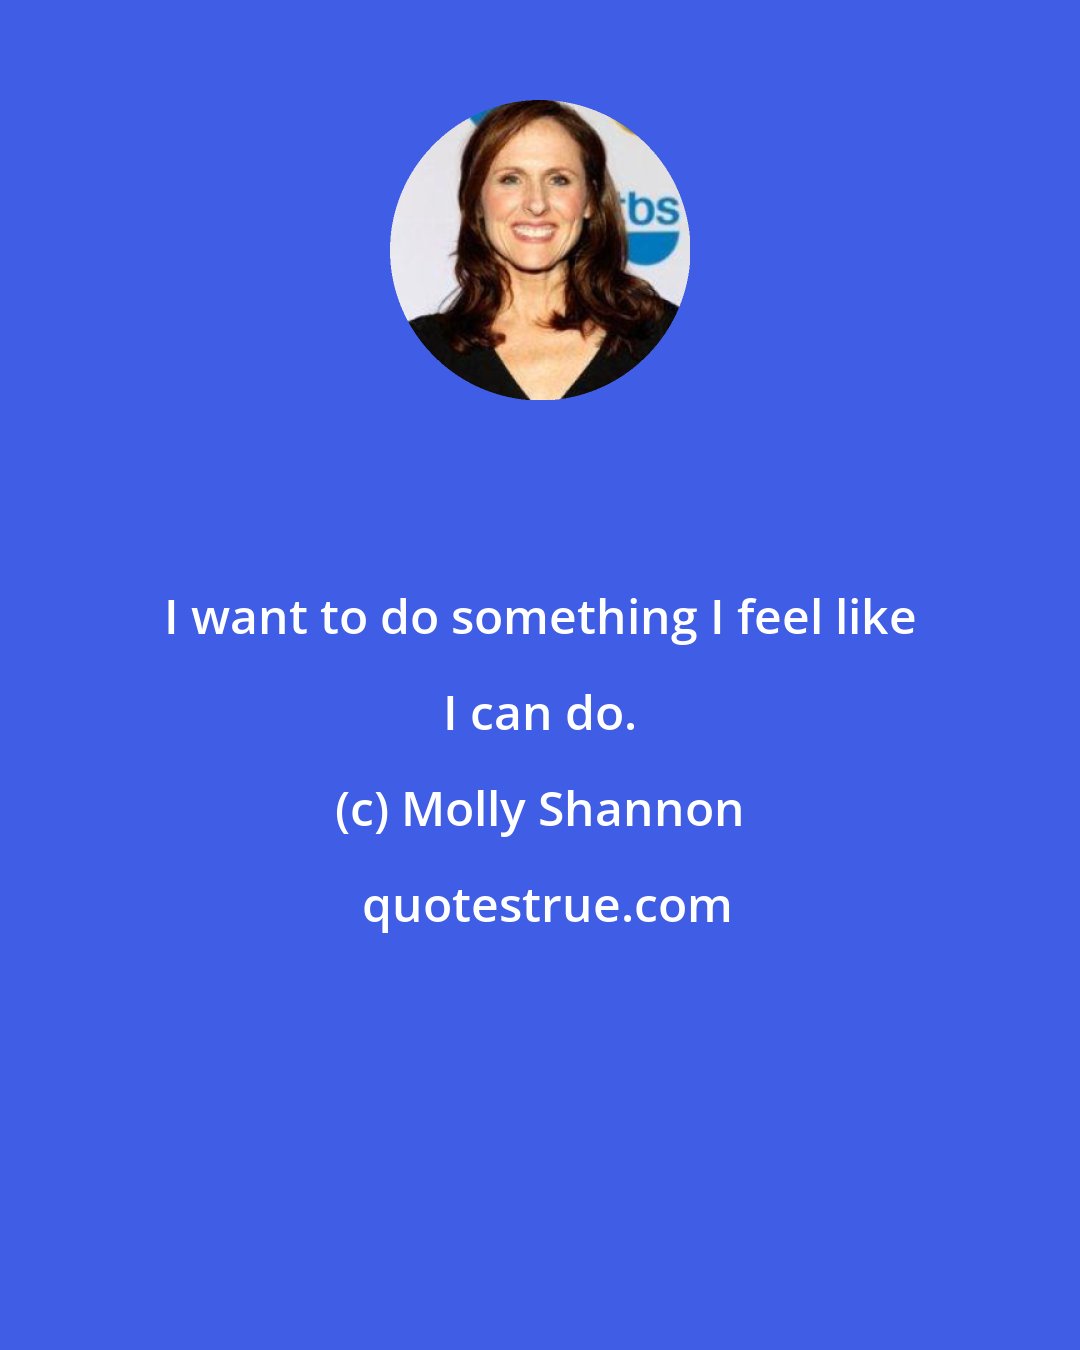 Molly Shannon: I want to do something I feel like I can do.